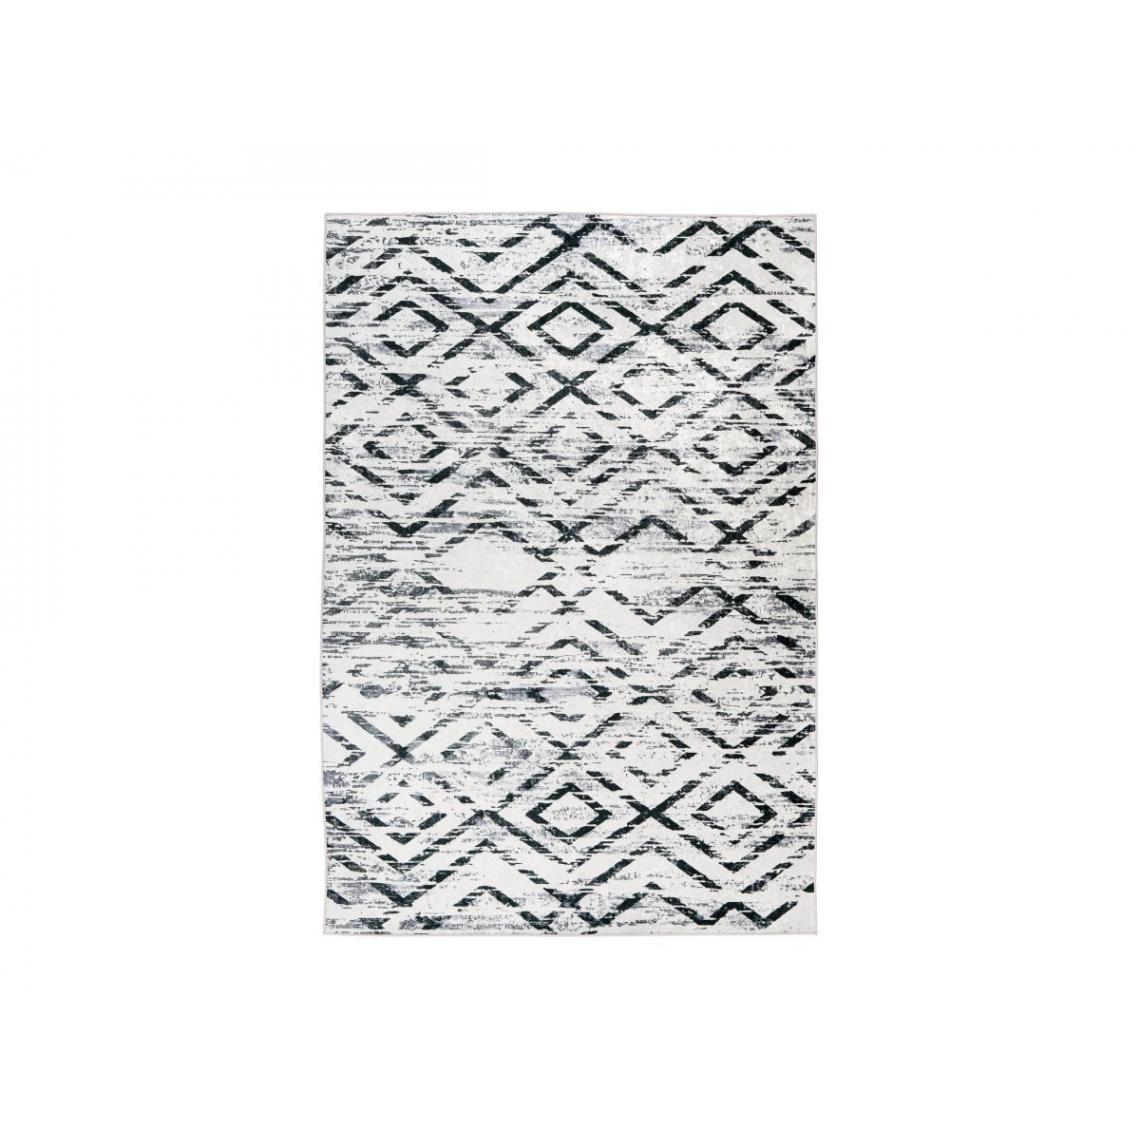 Bobochic - BOBOCHIC Tapis poil court rectangulaire SEBASTIAN motif ethnique Noir + Blanc 80x150 - Tapis